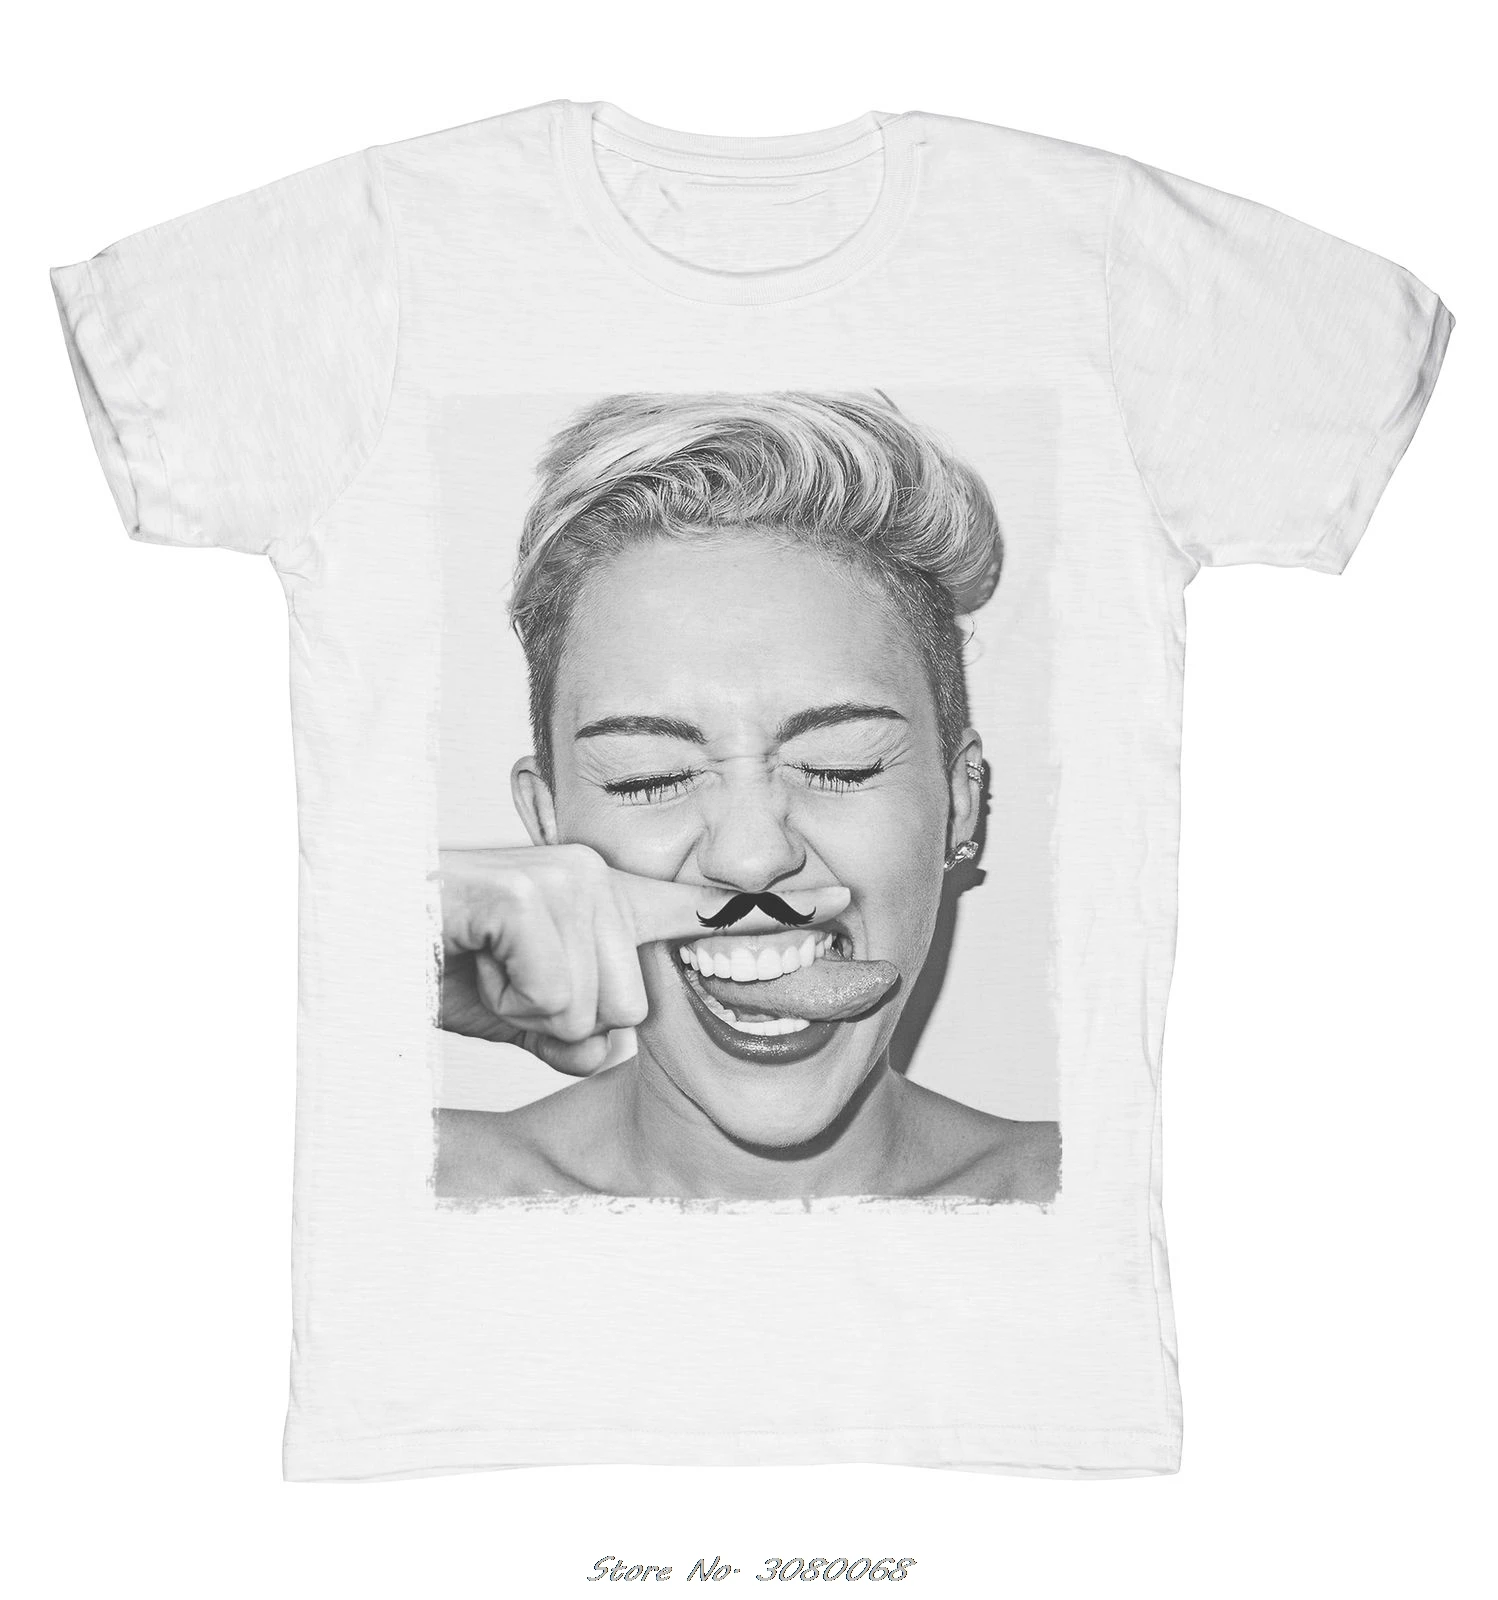 

New Blaze Man Funny Miley Cyrus Mustache Gift Idea T-shirt Men Short Sleeve Cotton Shirt Cool Tees Tops Streetwear